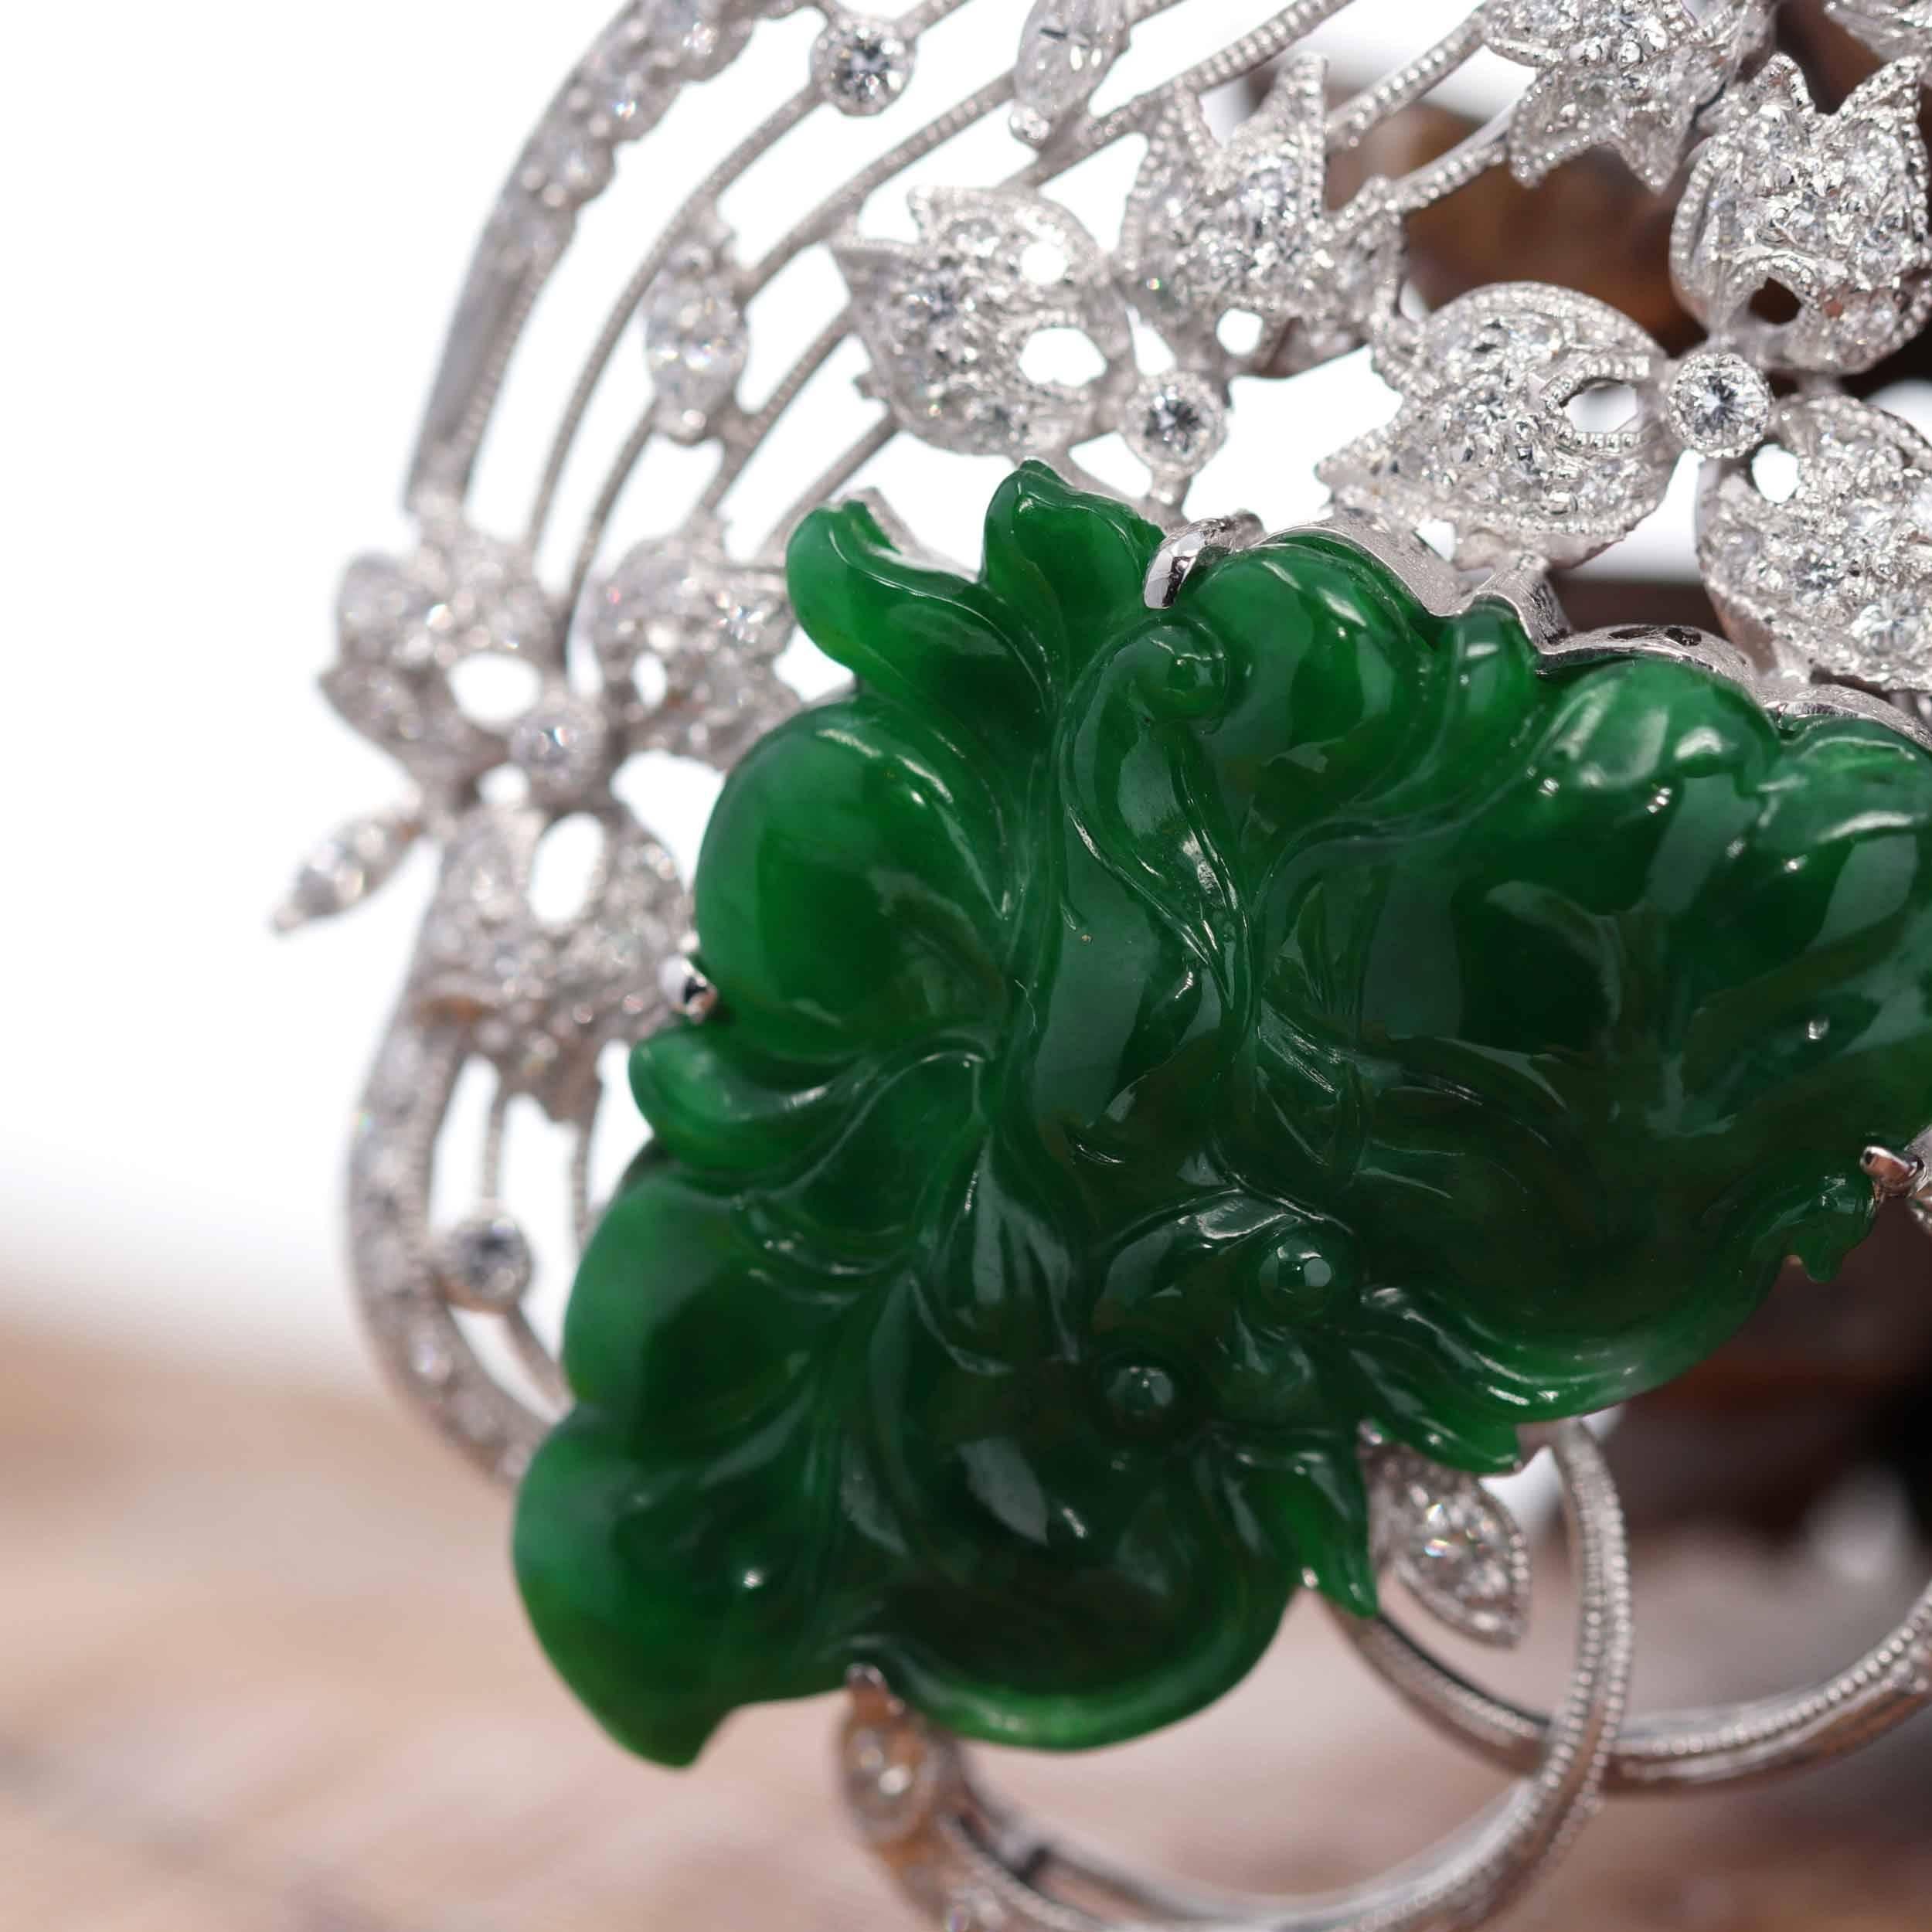 imperial jade jewelry